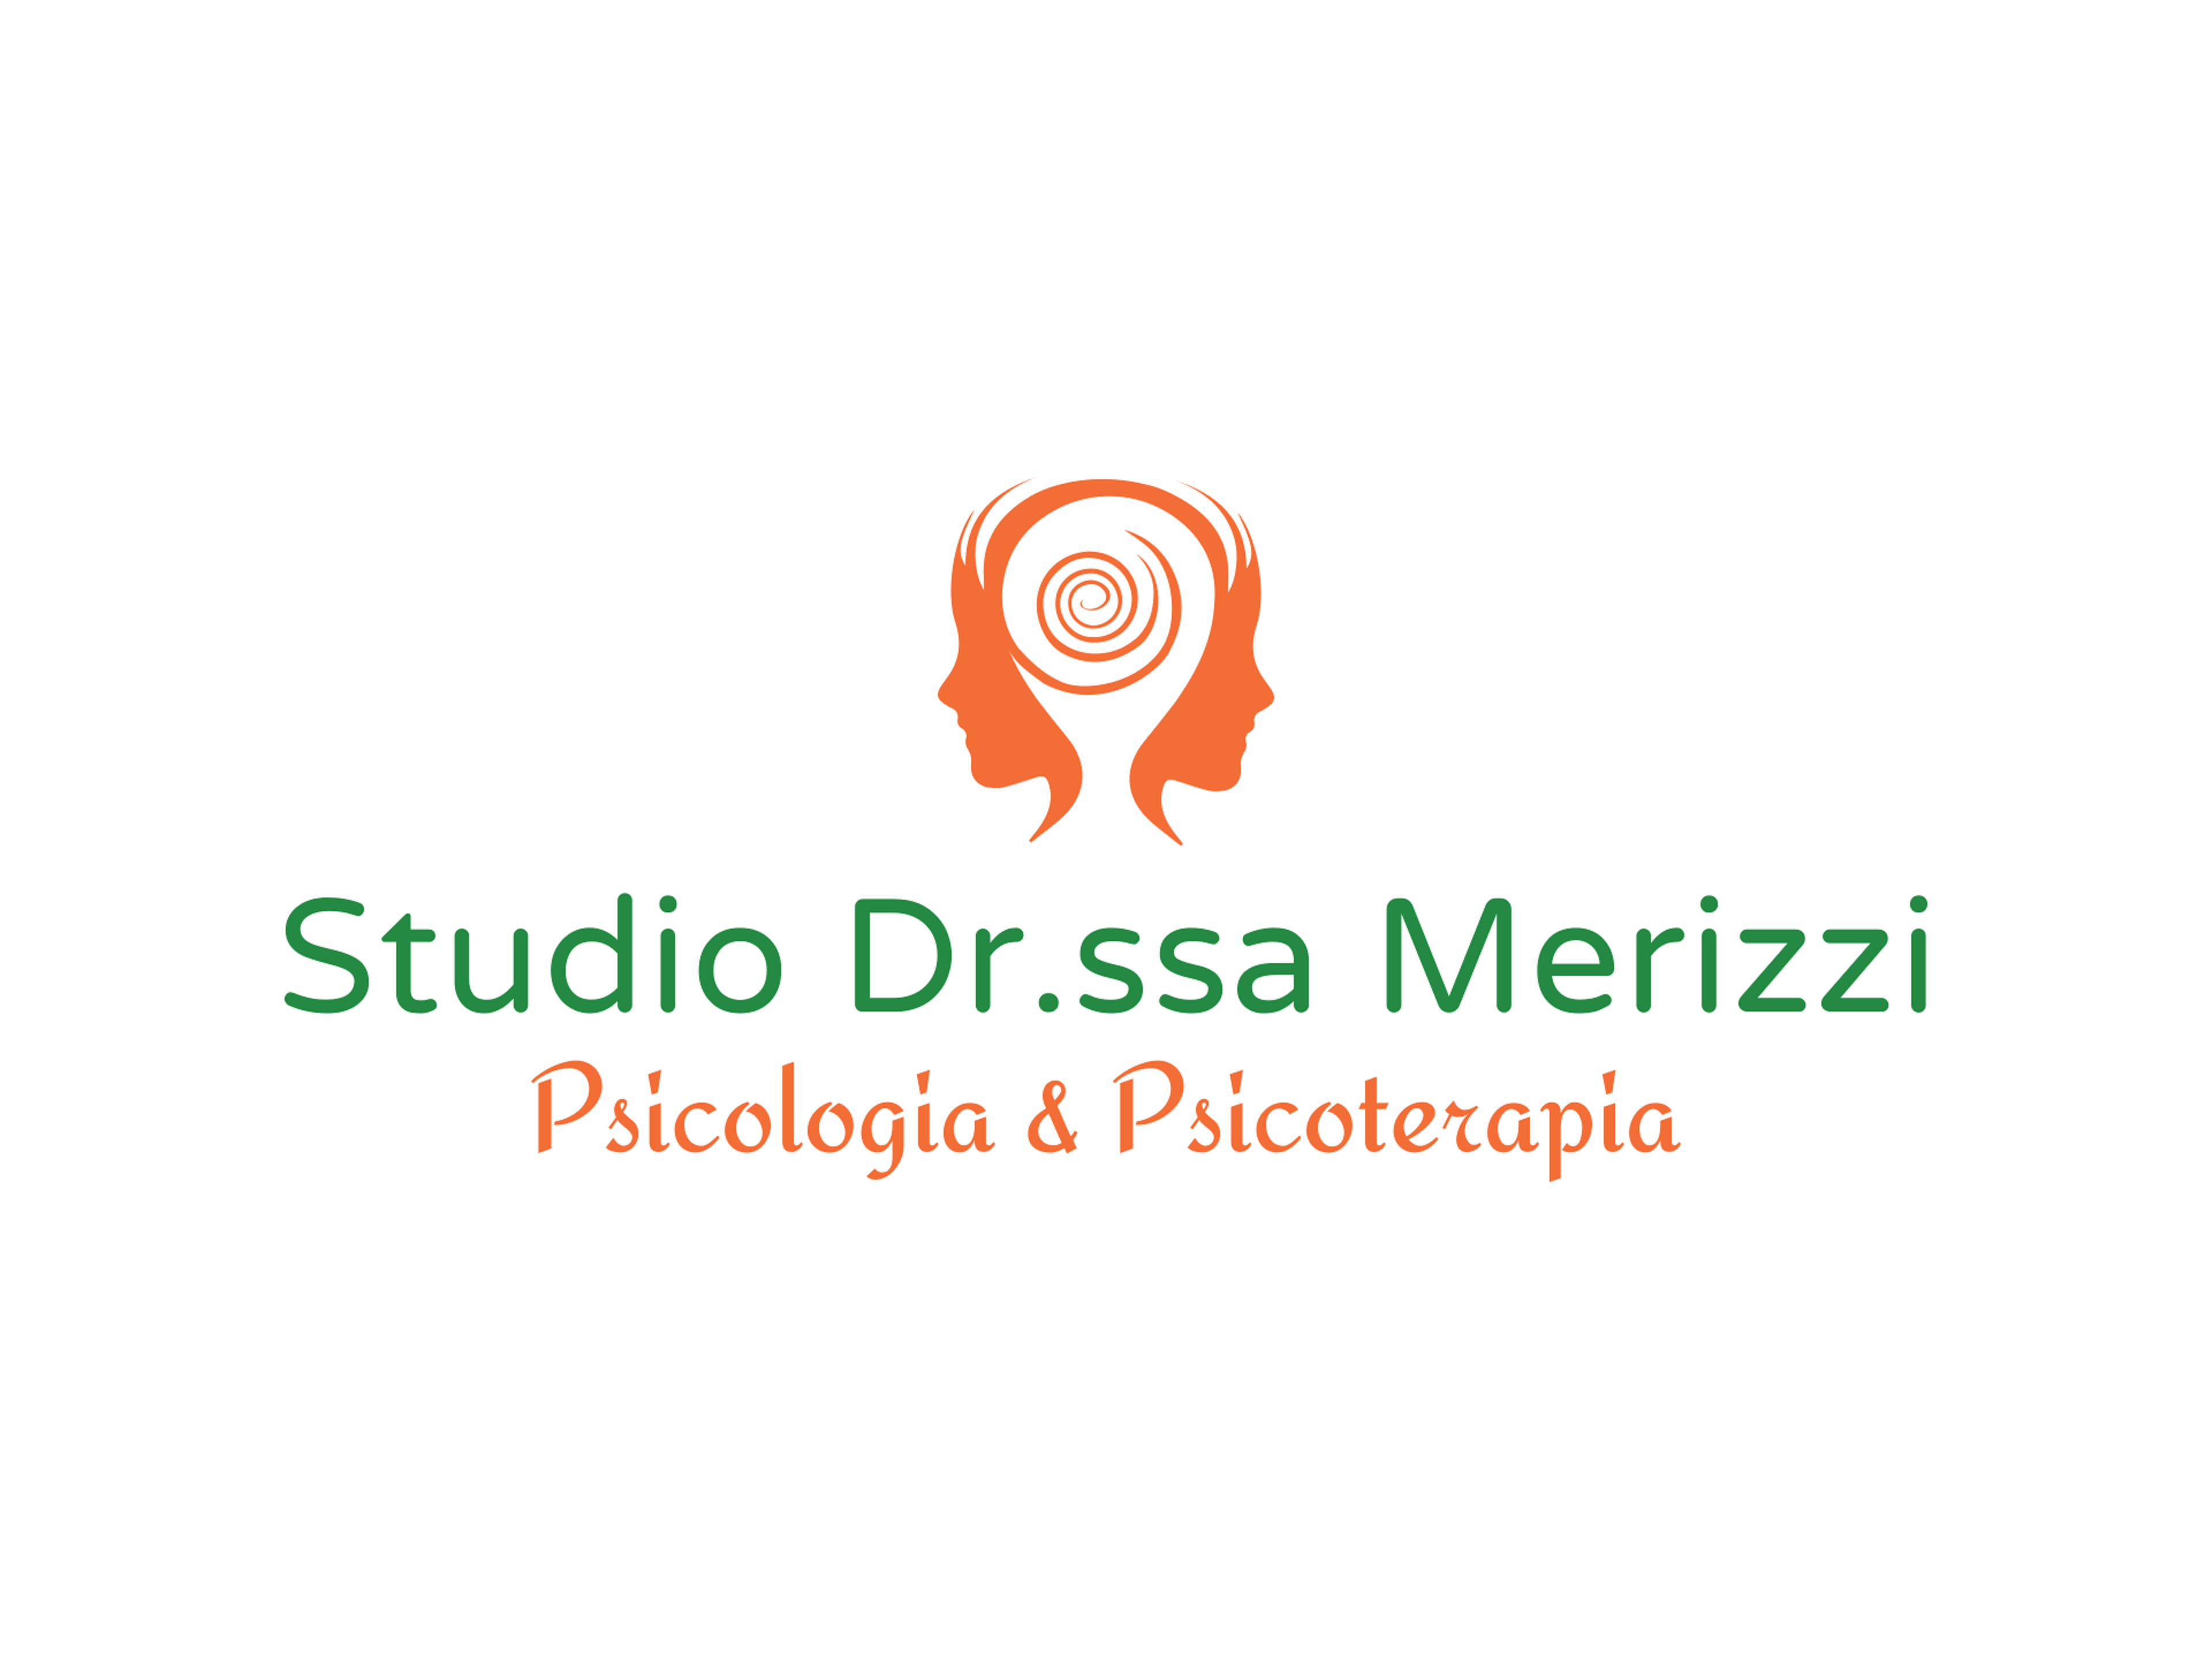 Studio Dr.ssa Merizzi